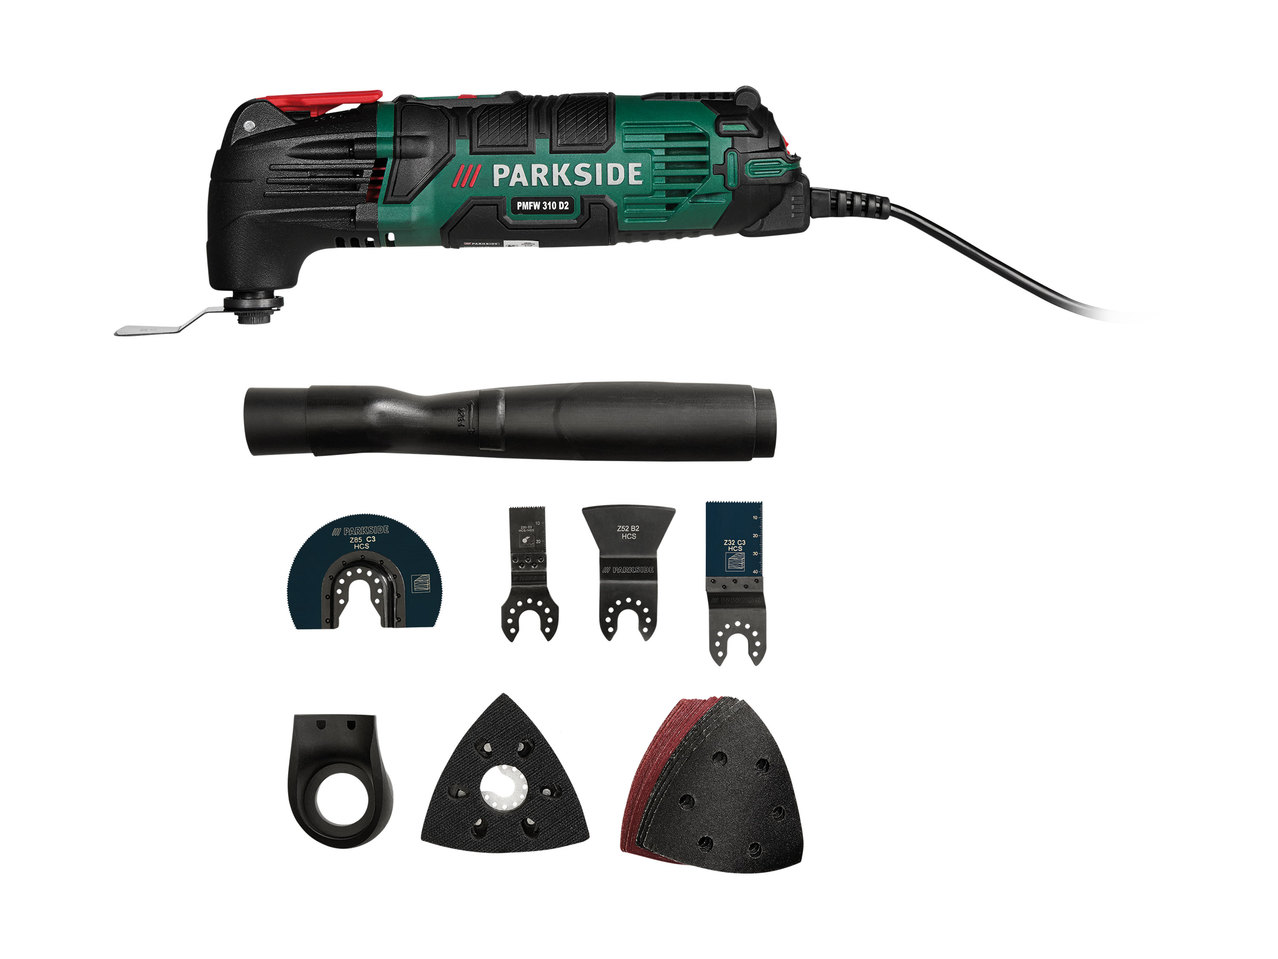 Parkside Multi-Purpose Tool1